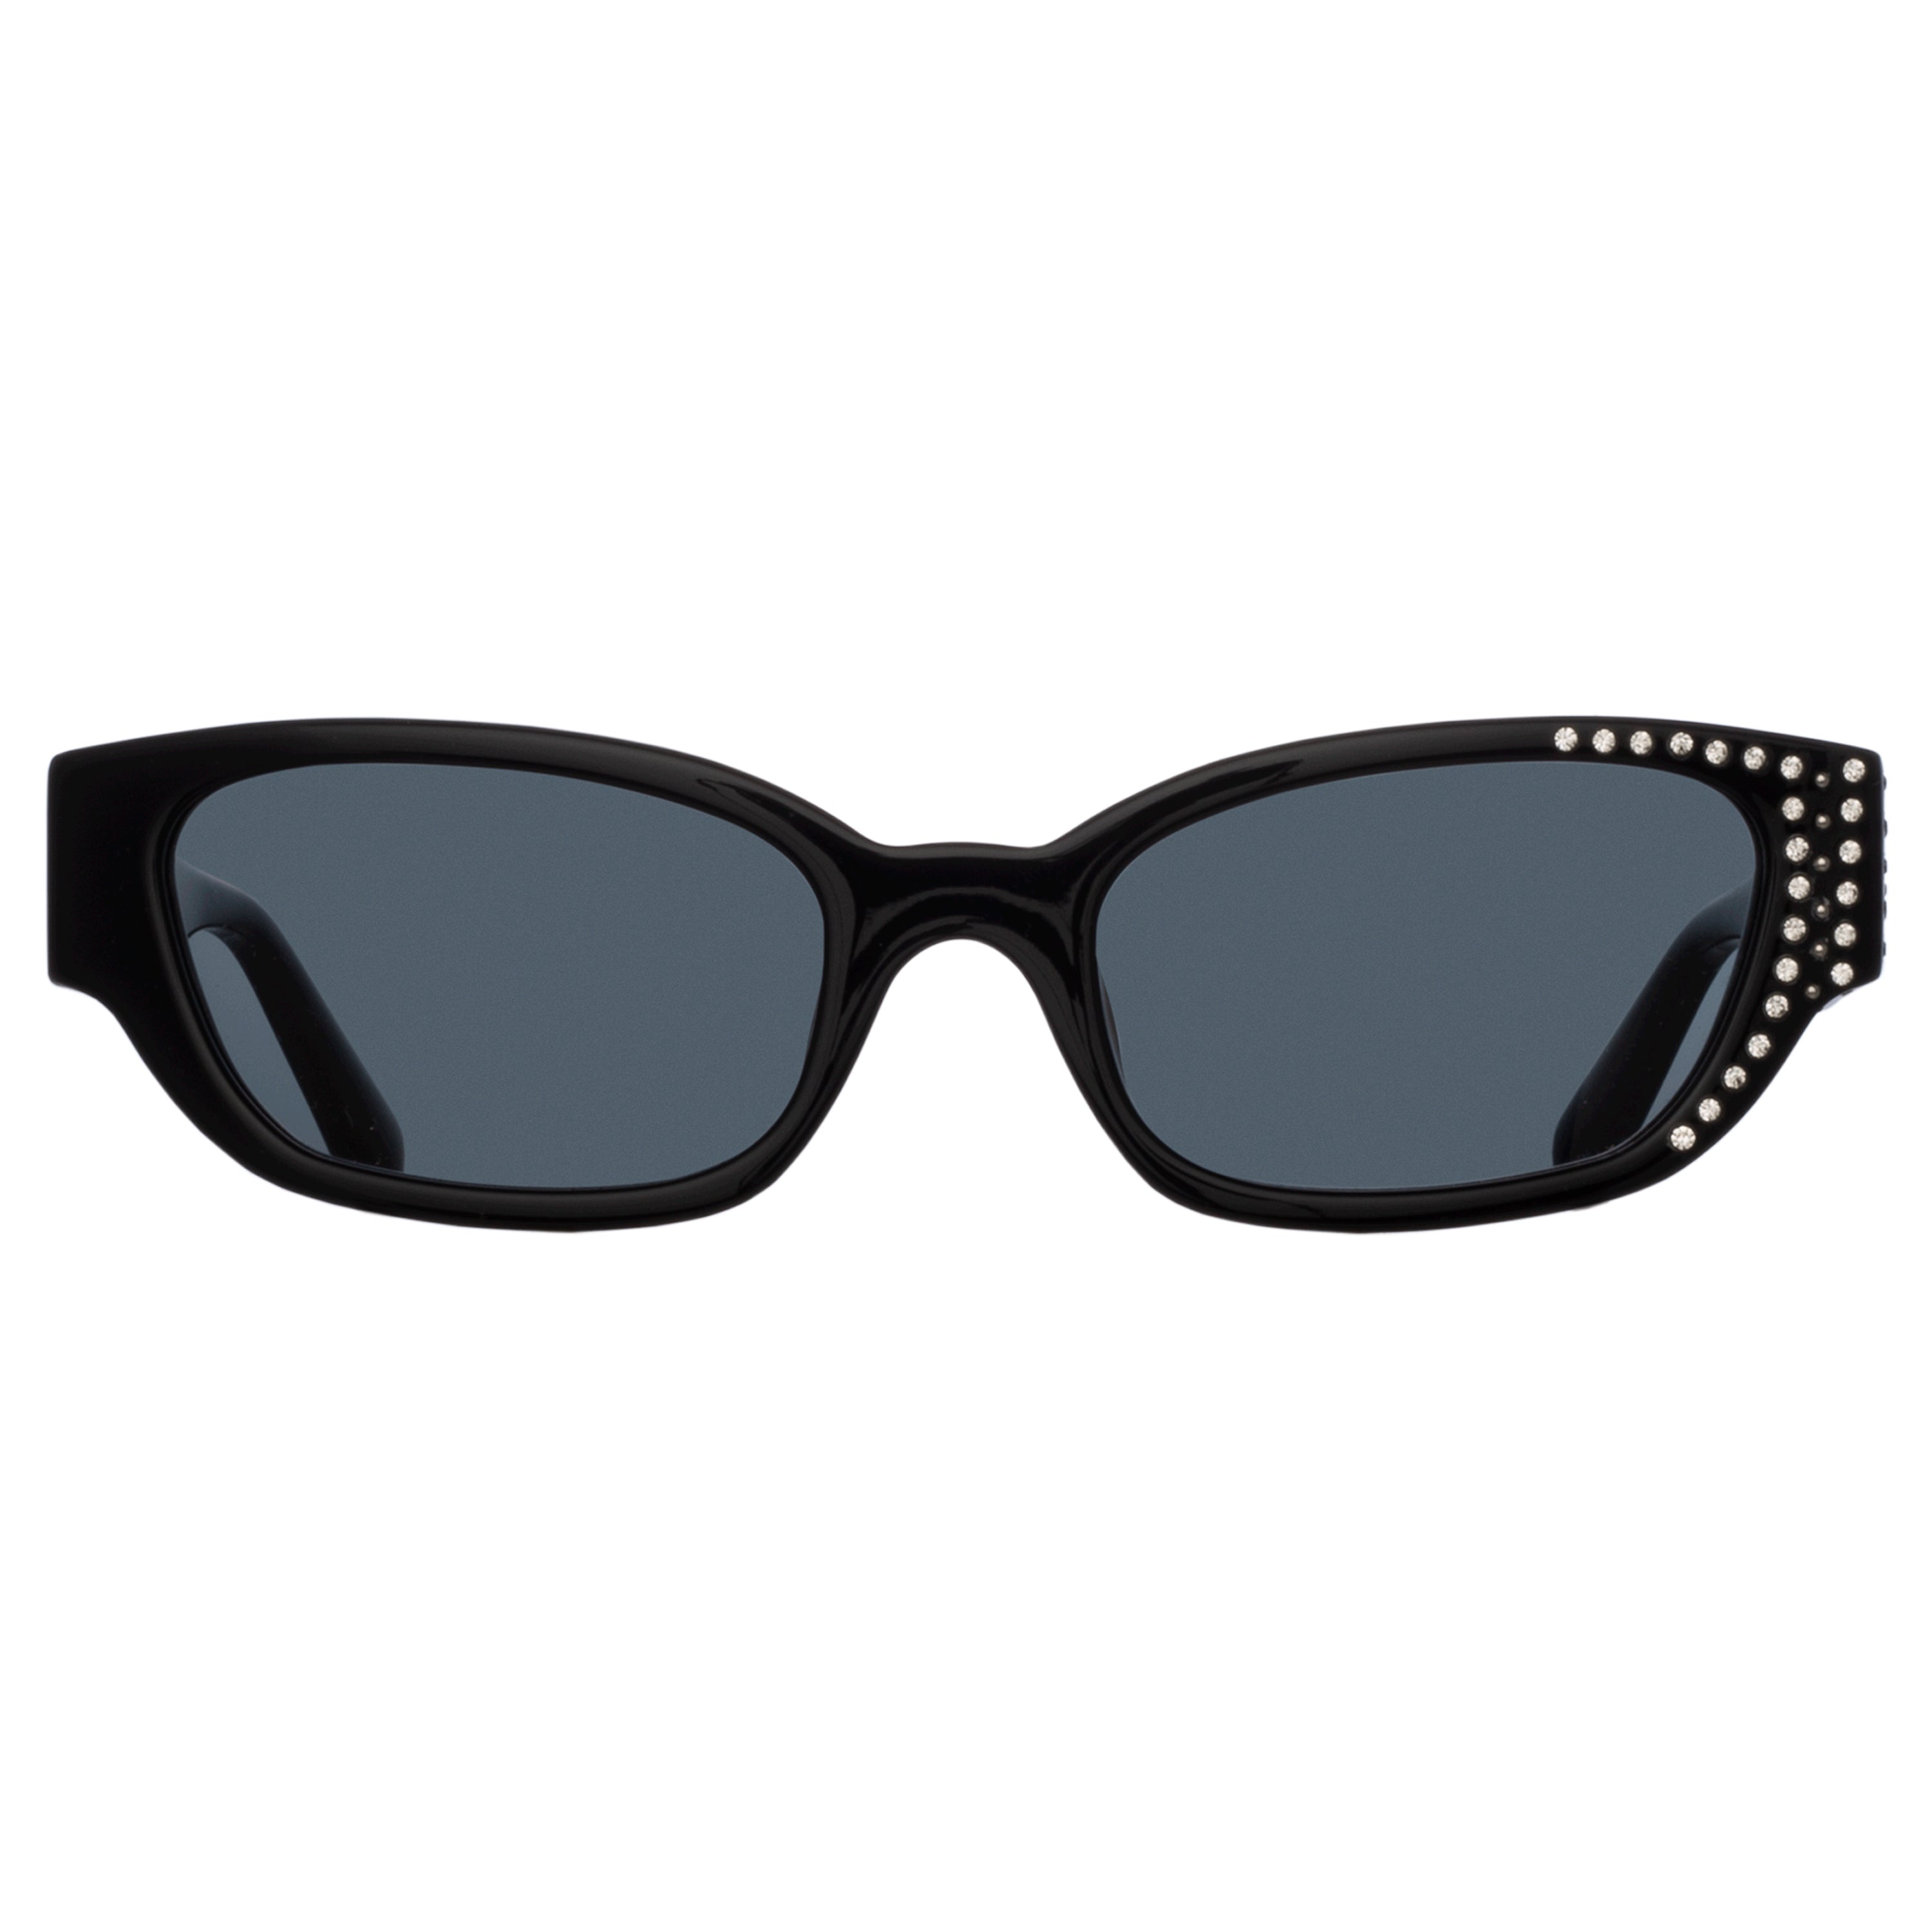 Magda Butrym Cat Eye Sunglasses in Black and Grey